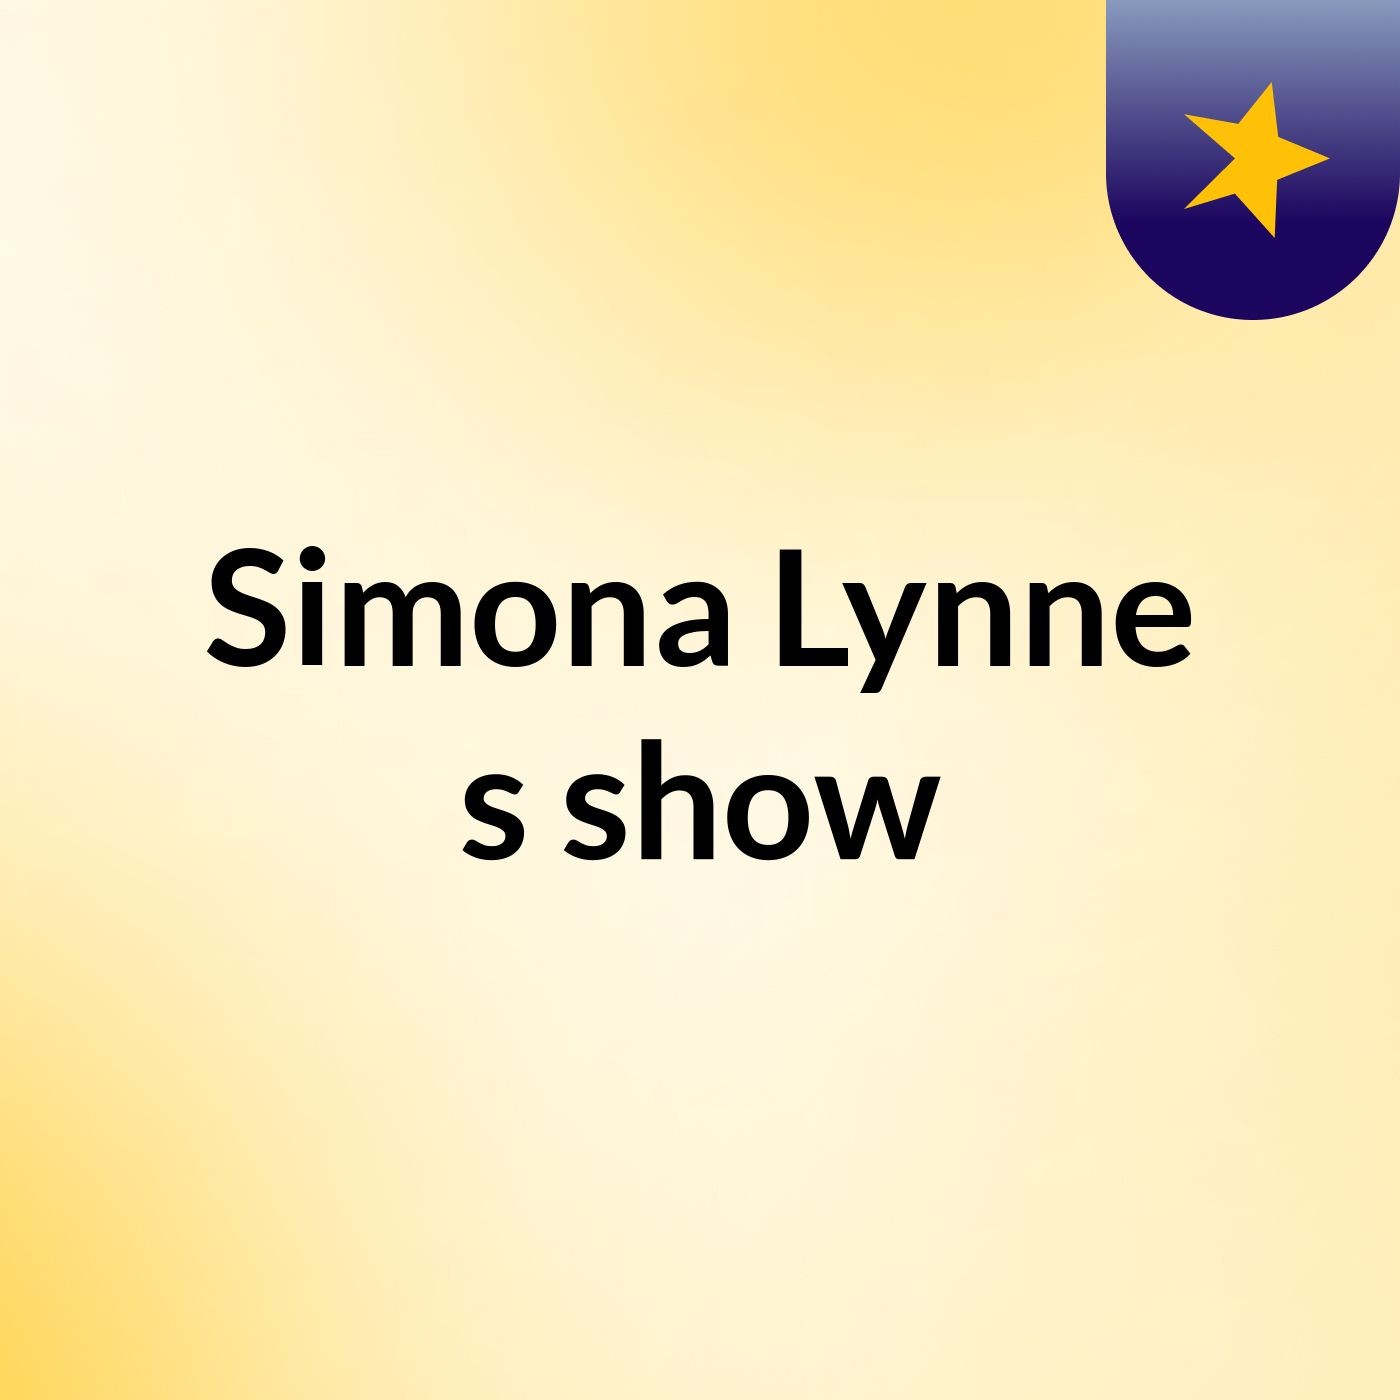 Simona Lynne's show